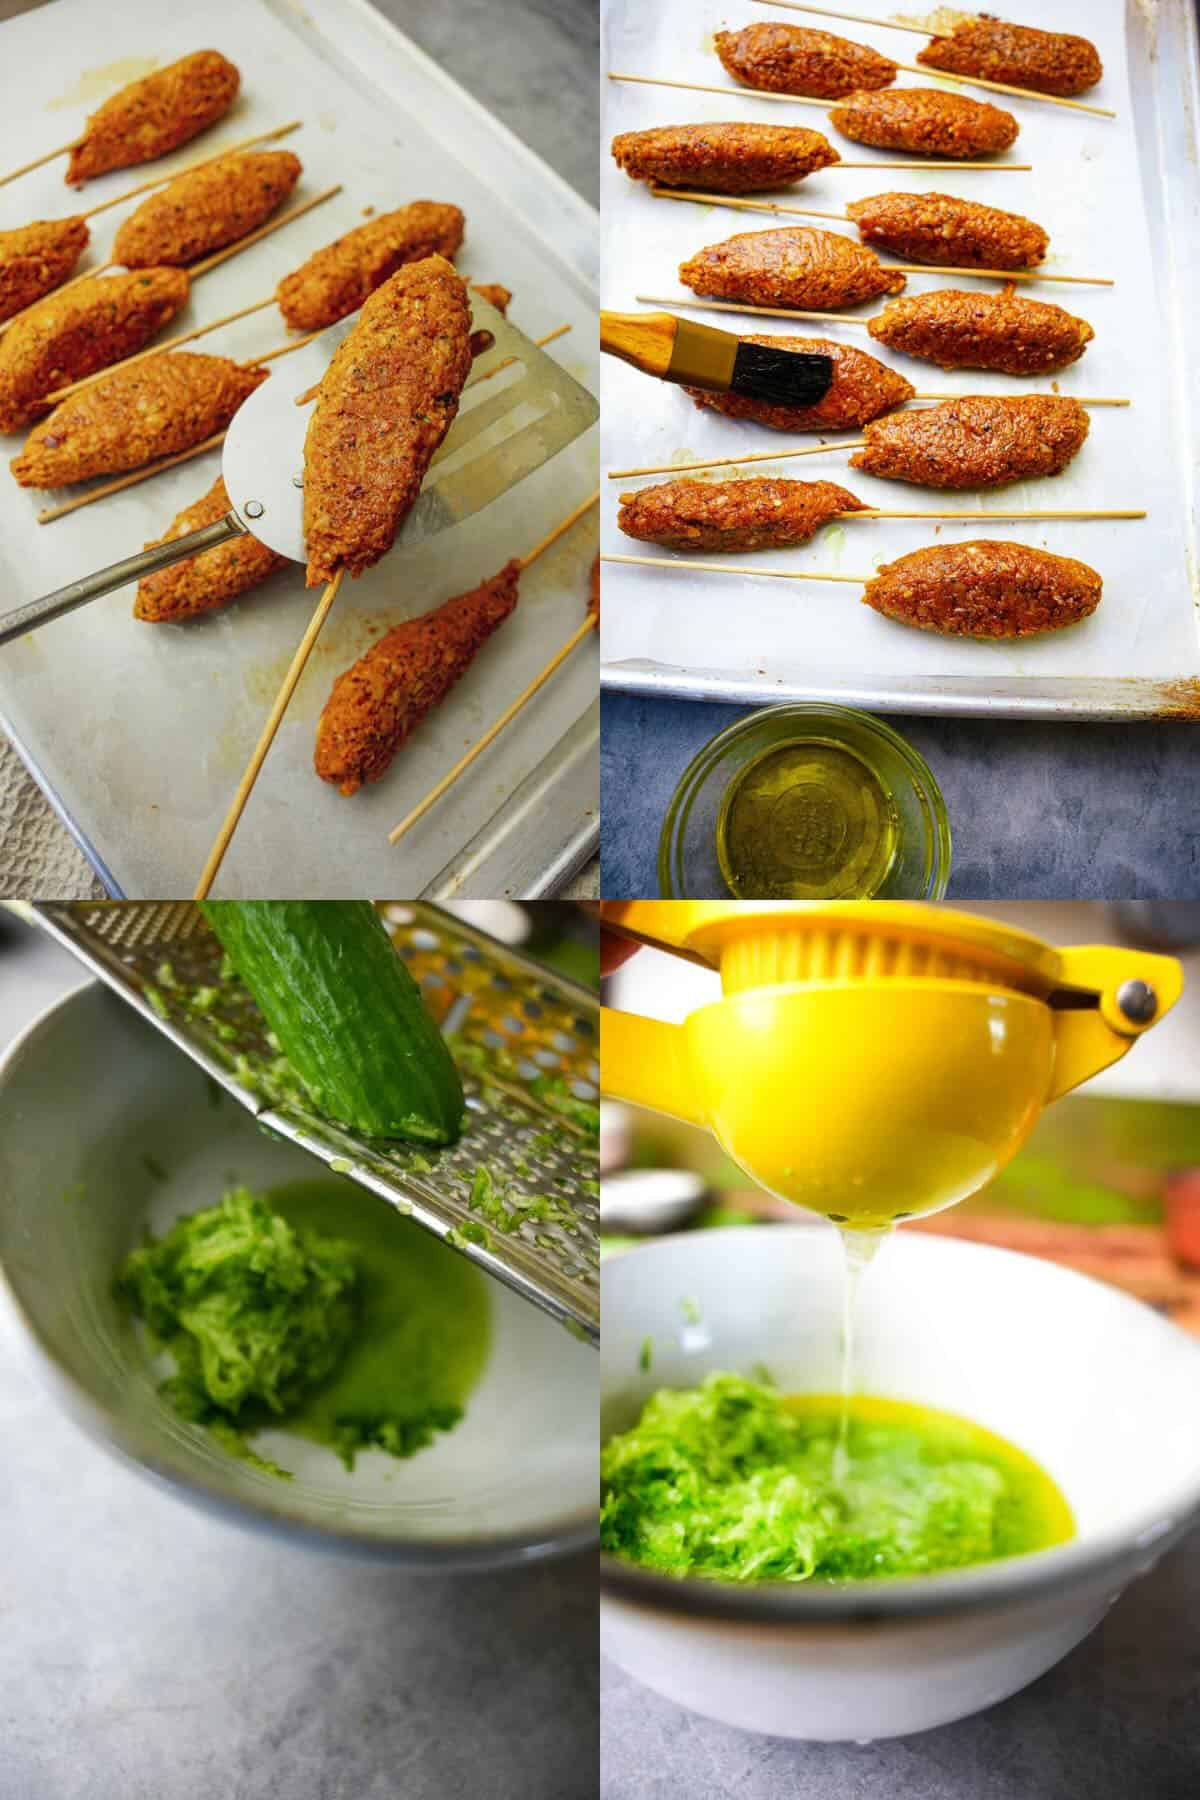 A series of photos showing how to make vegan kofta skewers and grating cucumber for tzatziki sauce.